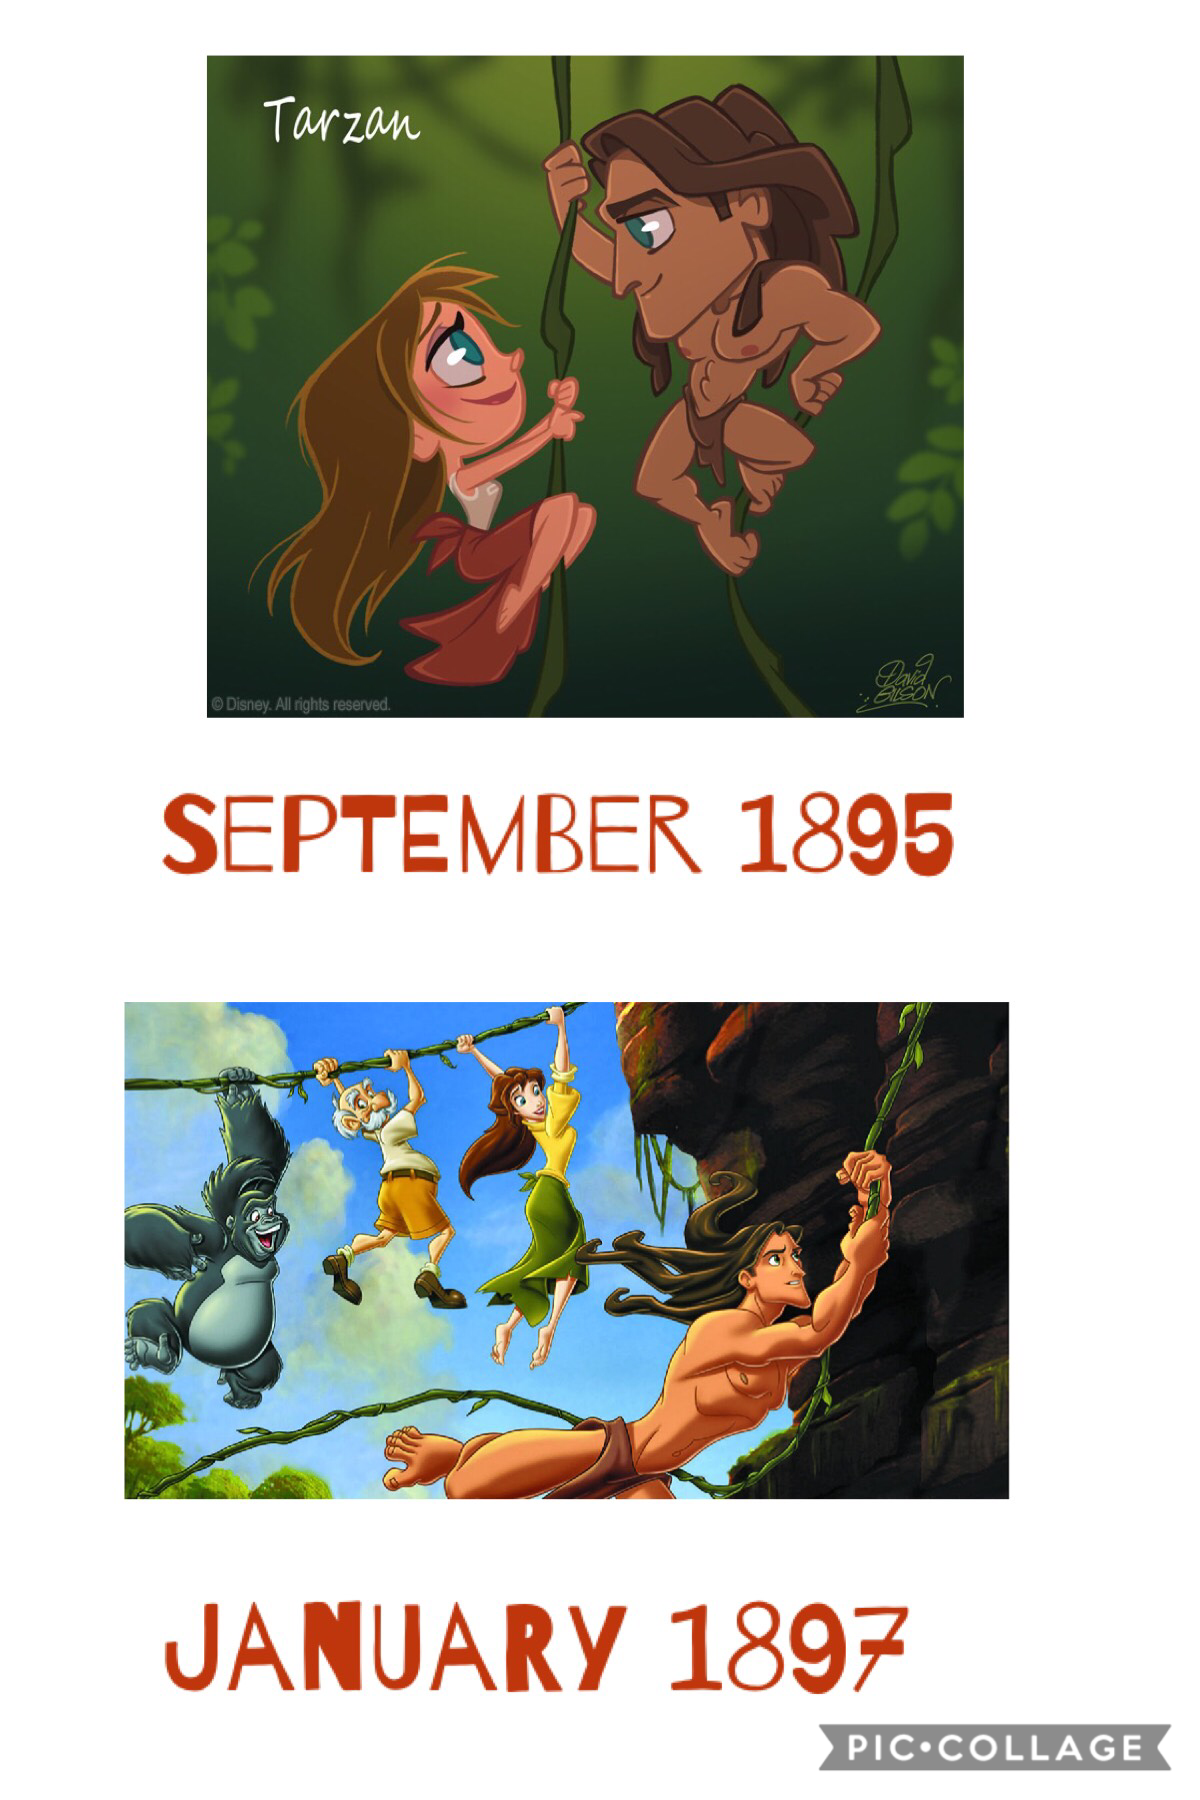 Two years Before Disney’s Tarzan the series. 